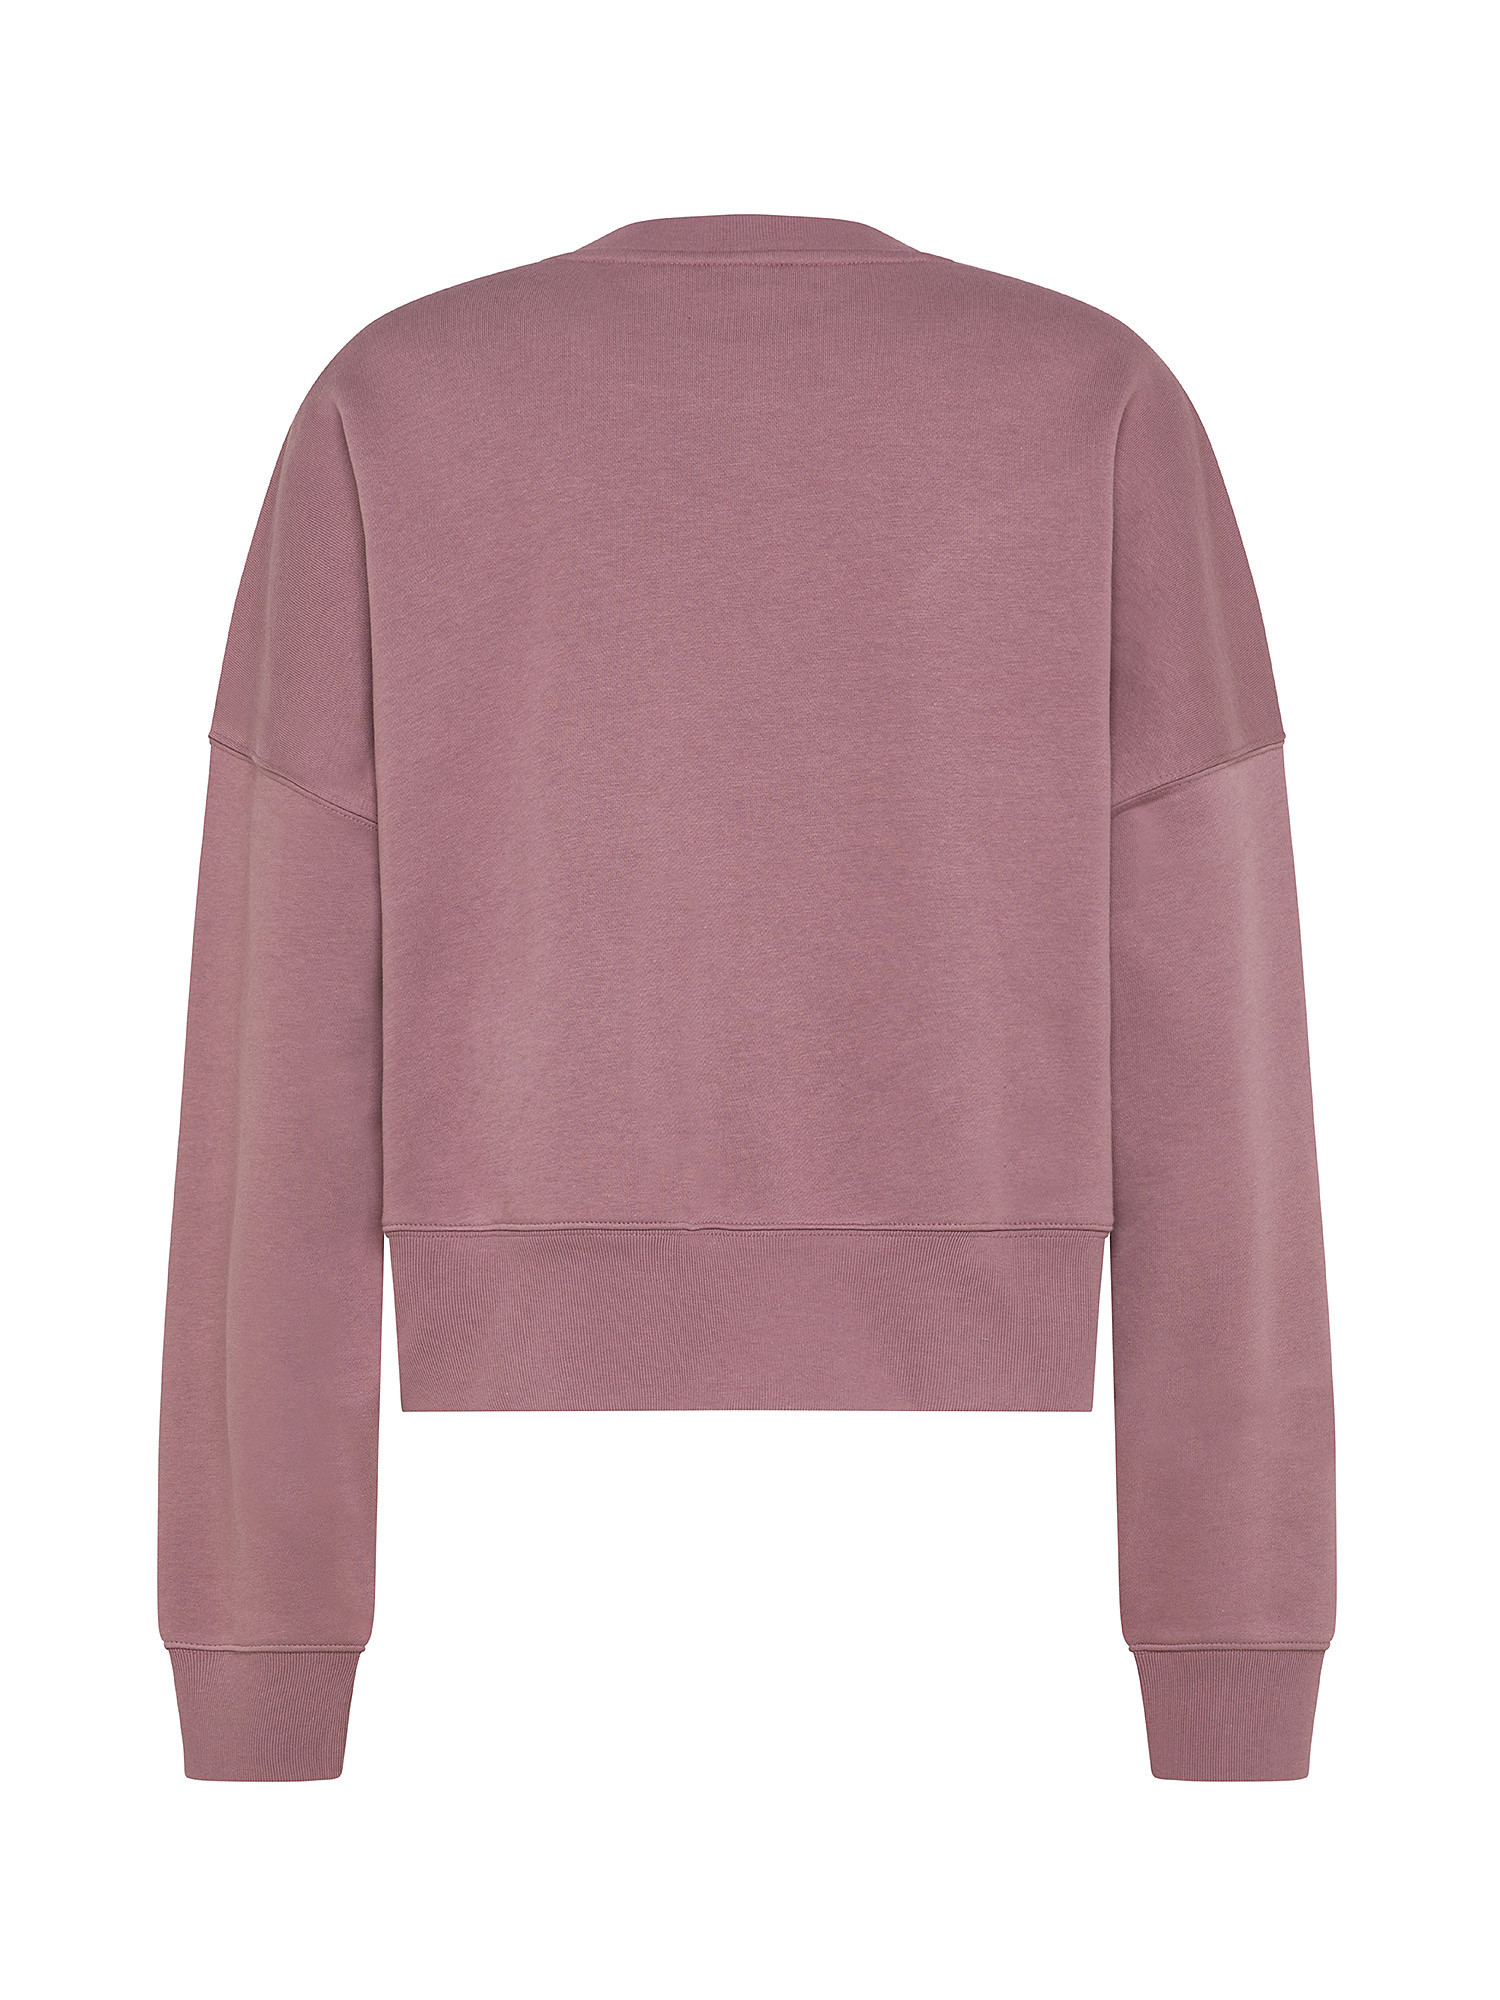 Adidas - Sweatshirt adicolor, Antique Pink, large image number 1